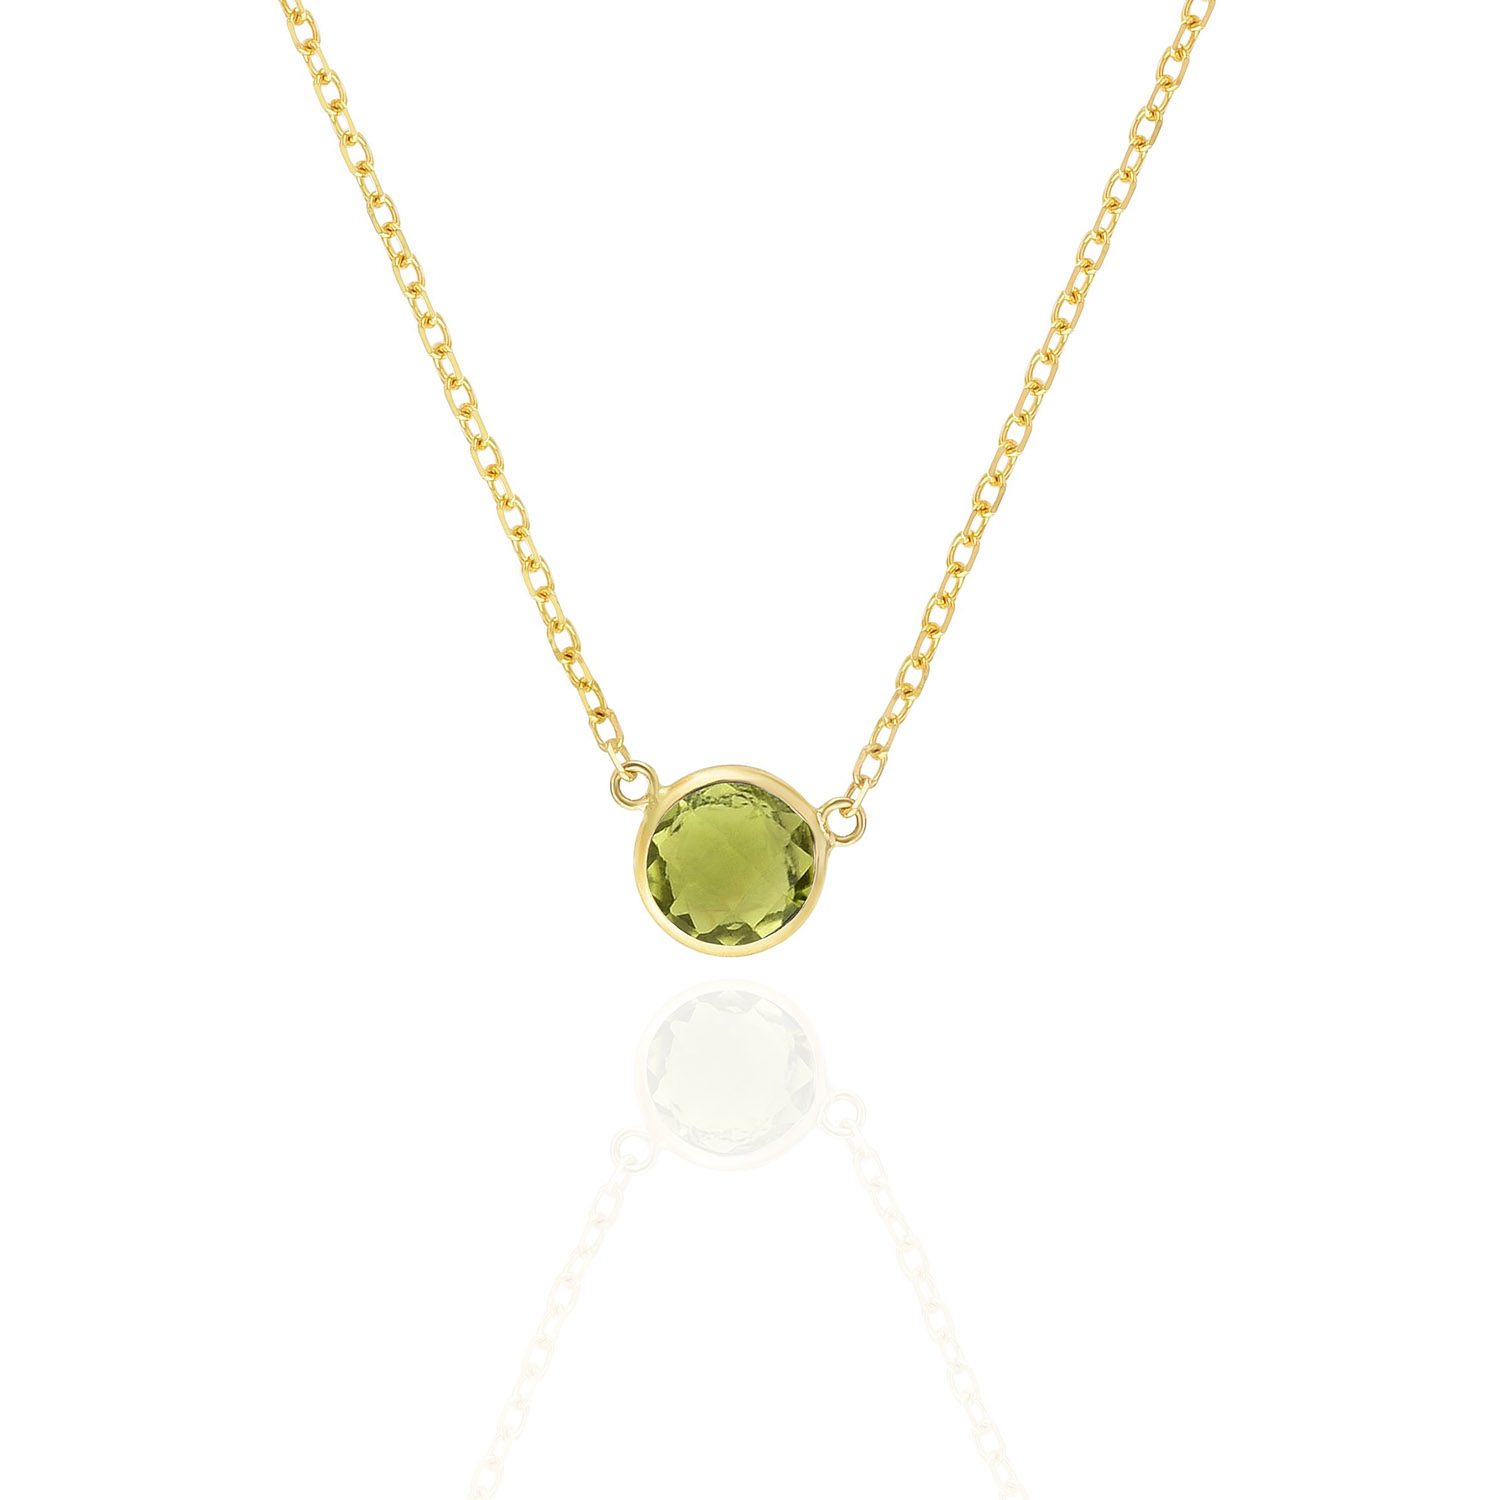 14K Yellow Gold 1Ct Bezel Set Colored Gem Birthstone Necklace Chain 15"-17" - Peridot